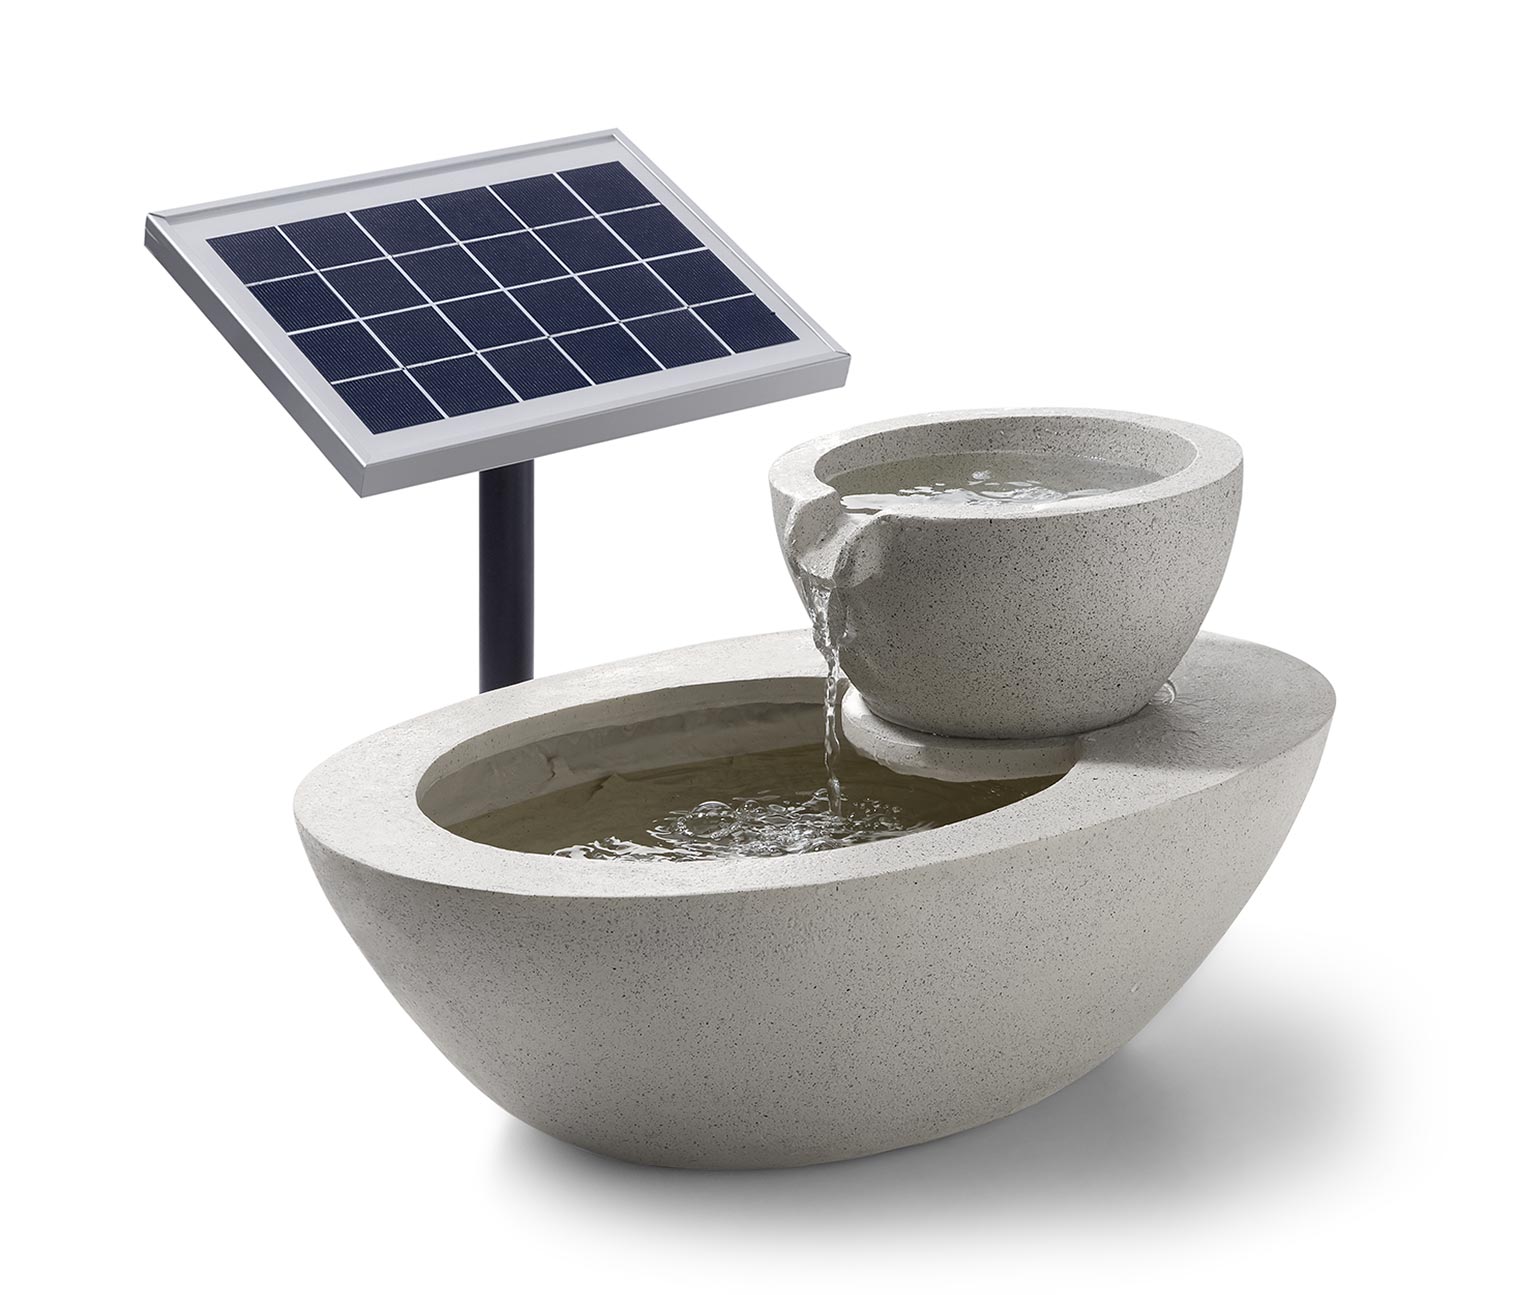 Solar-Gartenbrunnen online bestellen bei Tchibo 370820